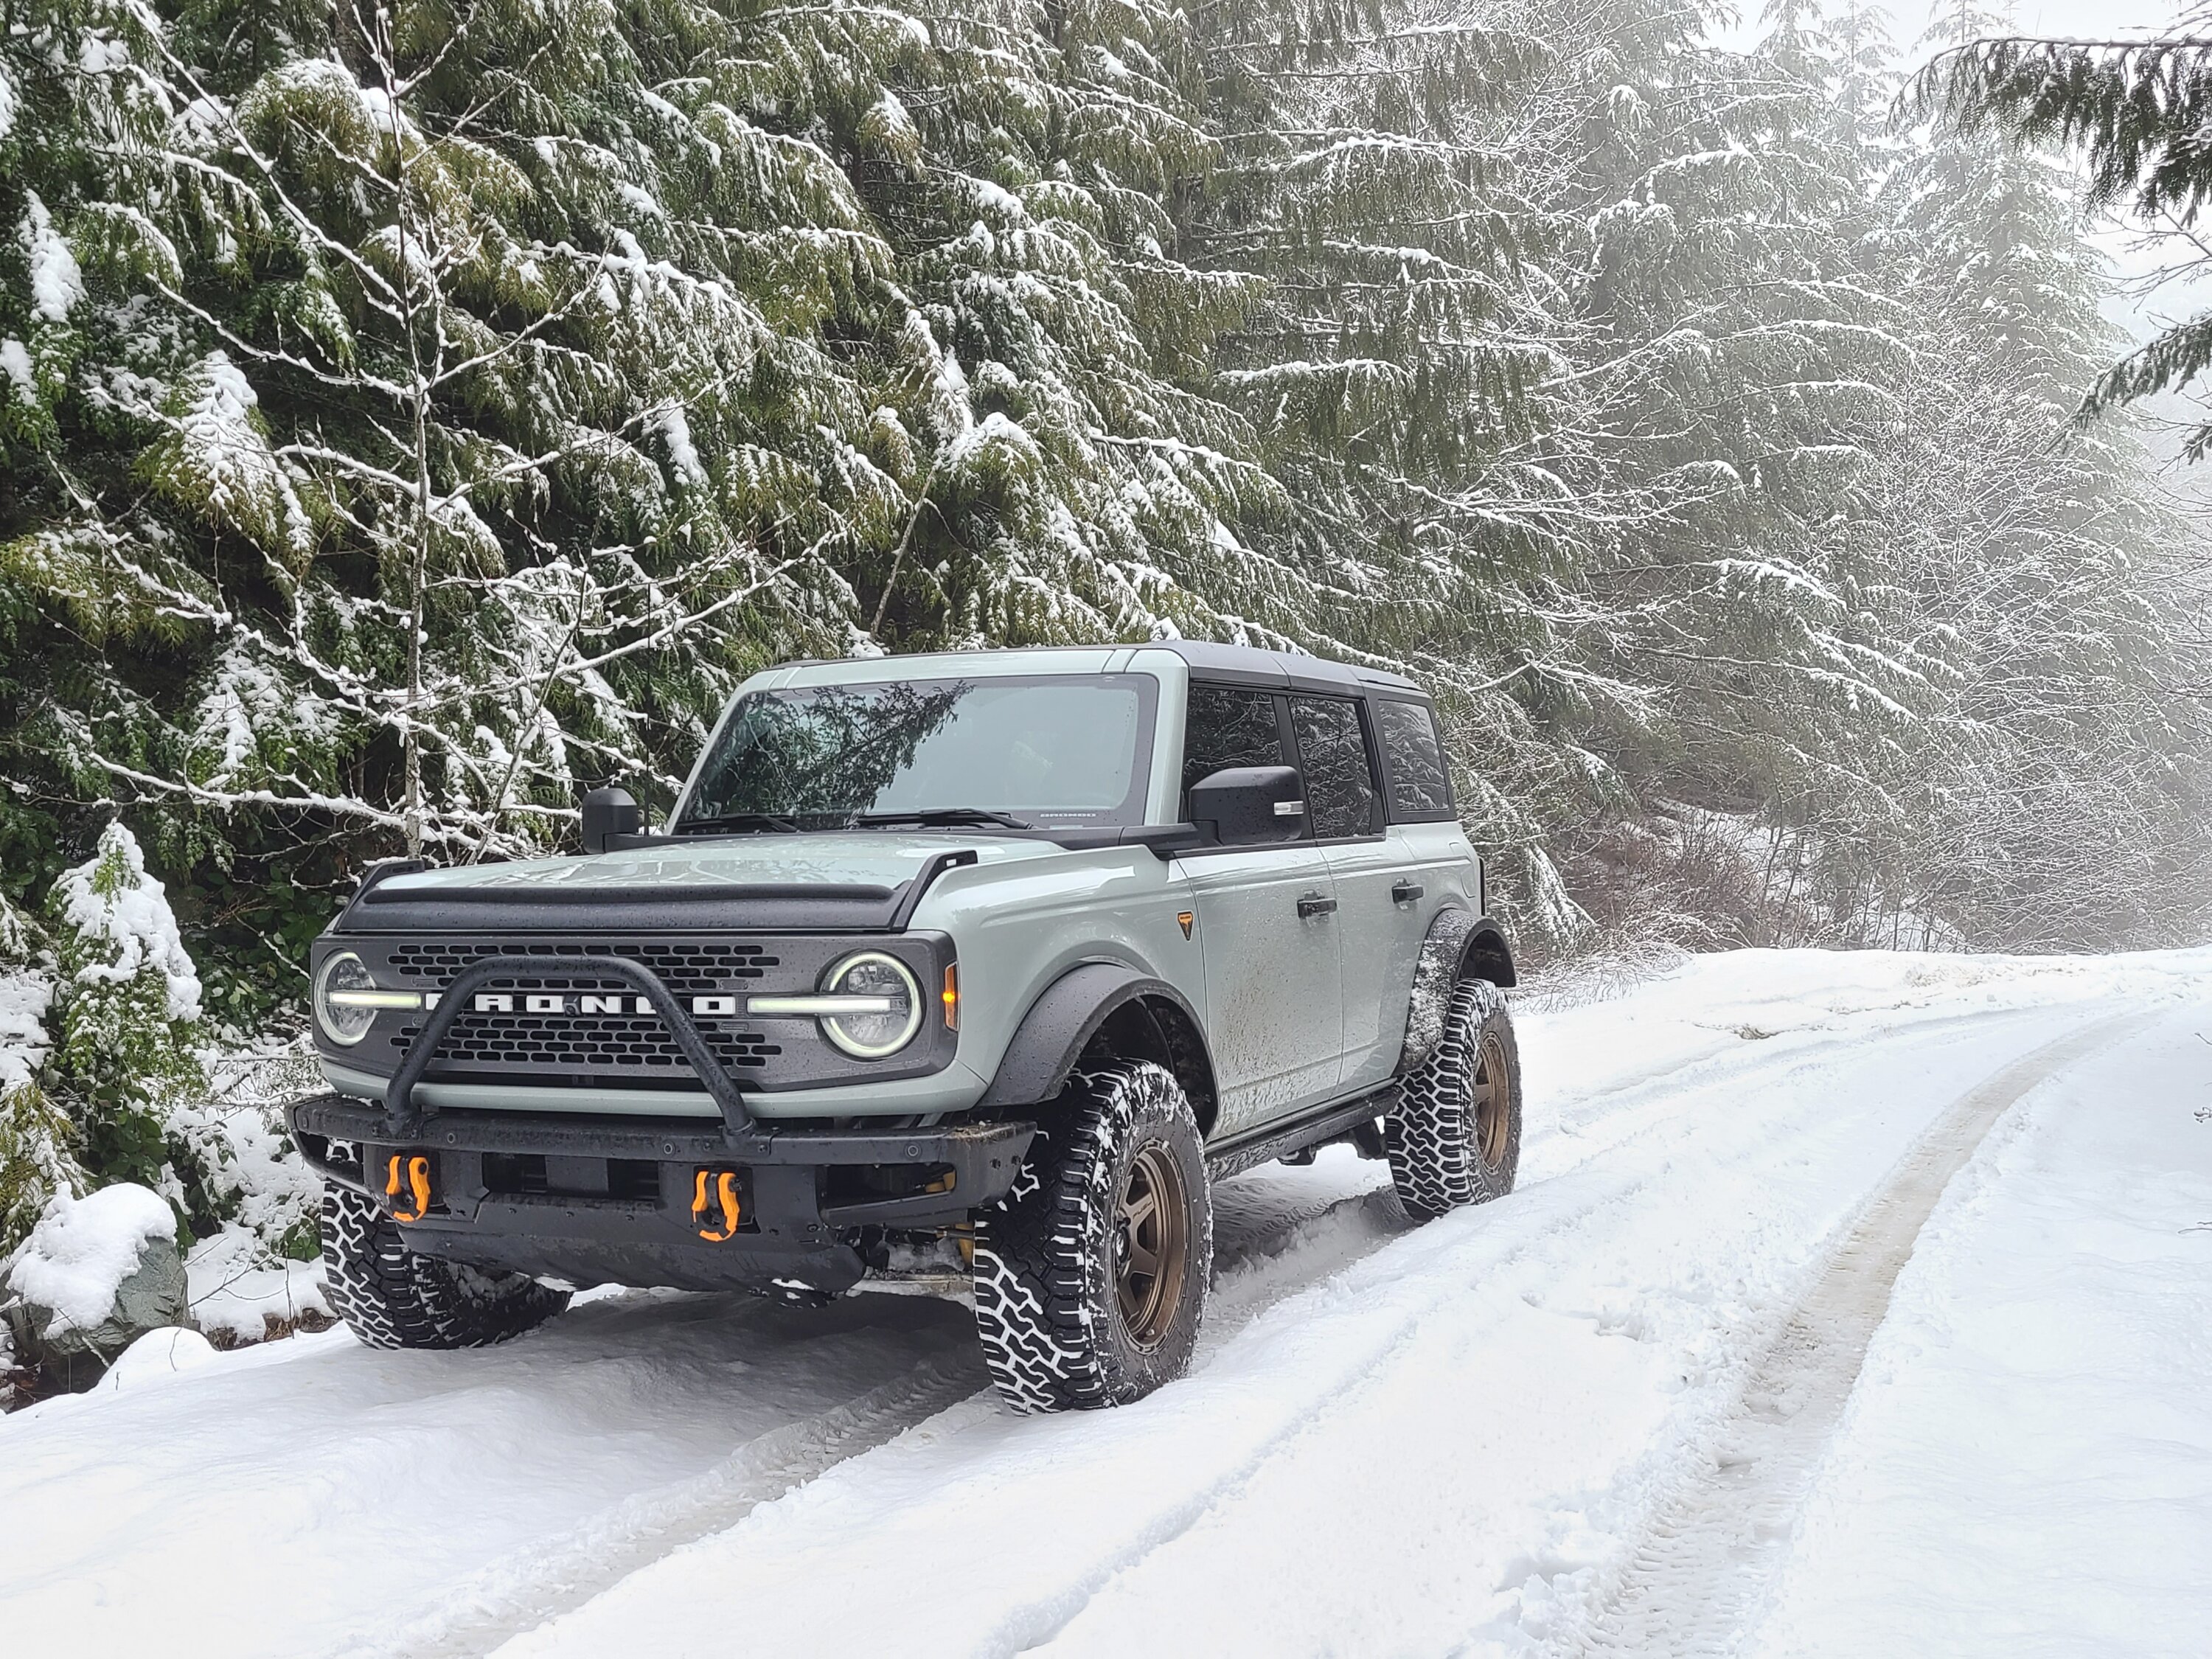 Ford Bronco Show us your Bronco snow pics!! ☃️❄️🥶 20220220_101425